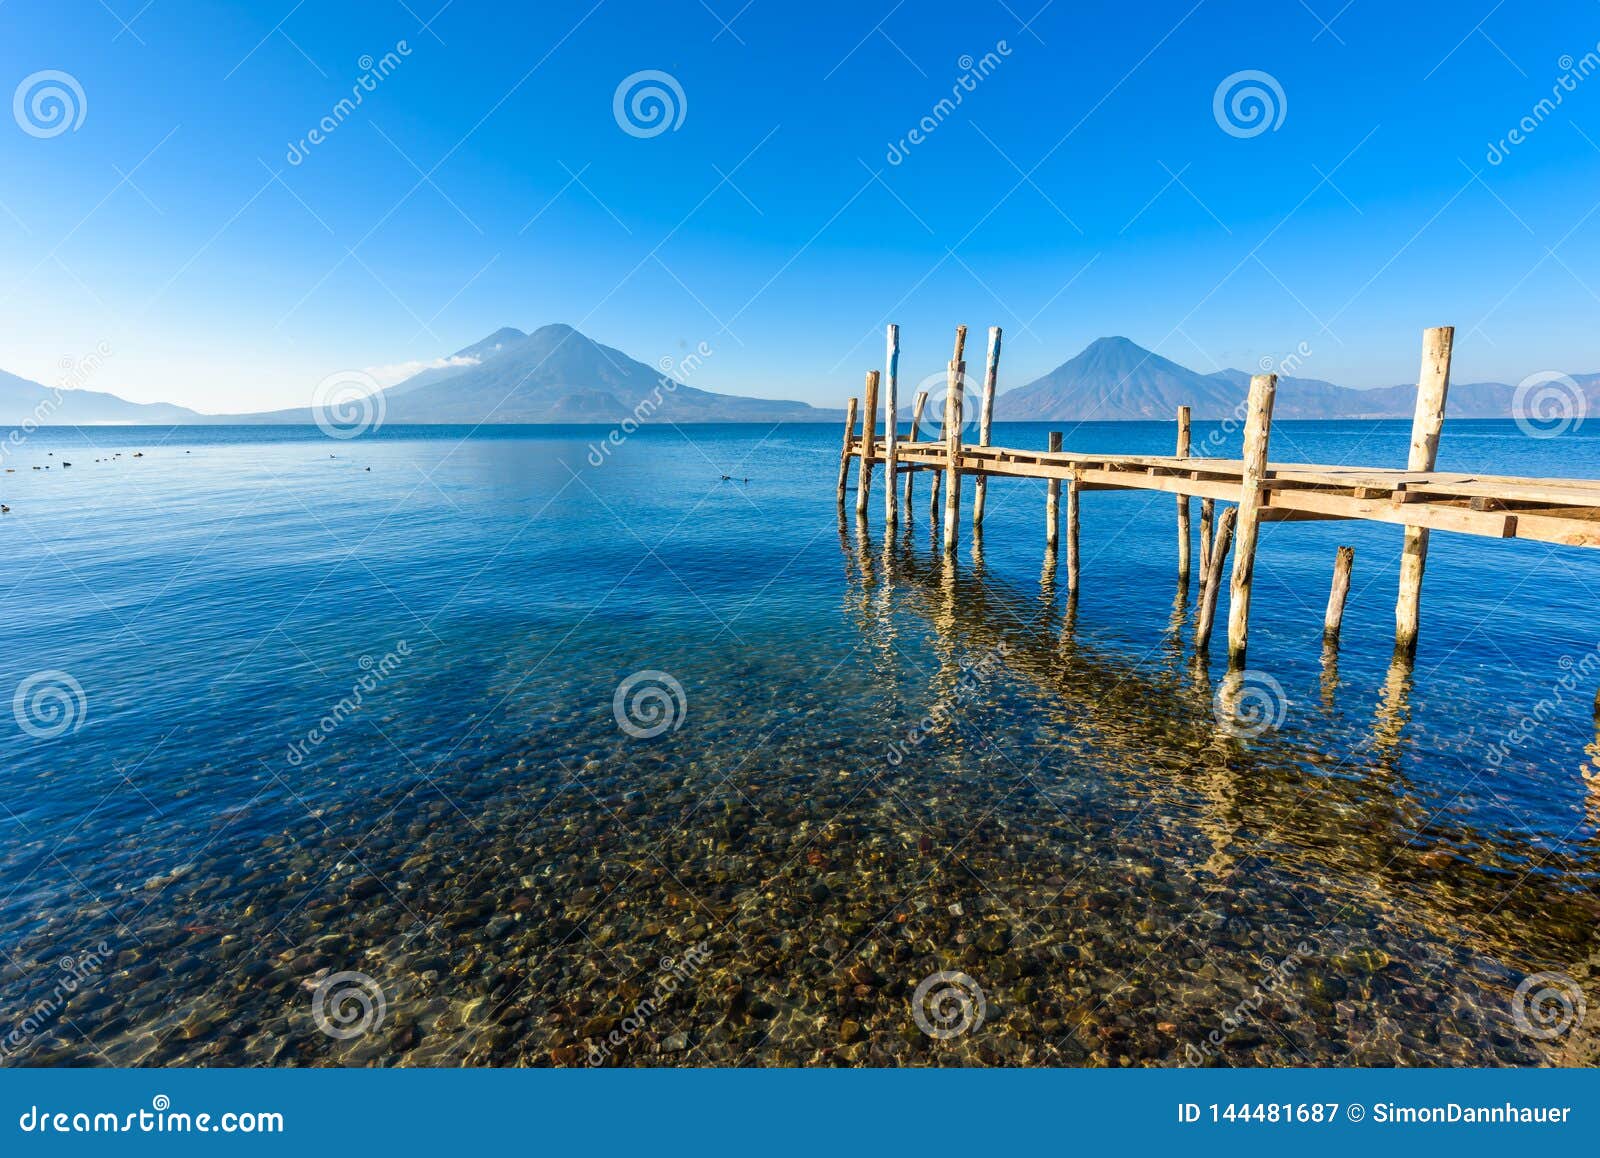 wooden pier at lake atitlan on the beach in panajachel, guatemala. with beautiful landscape scenery of volcanoes toliman, atitlan